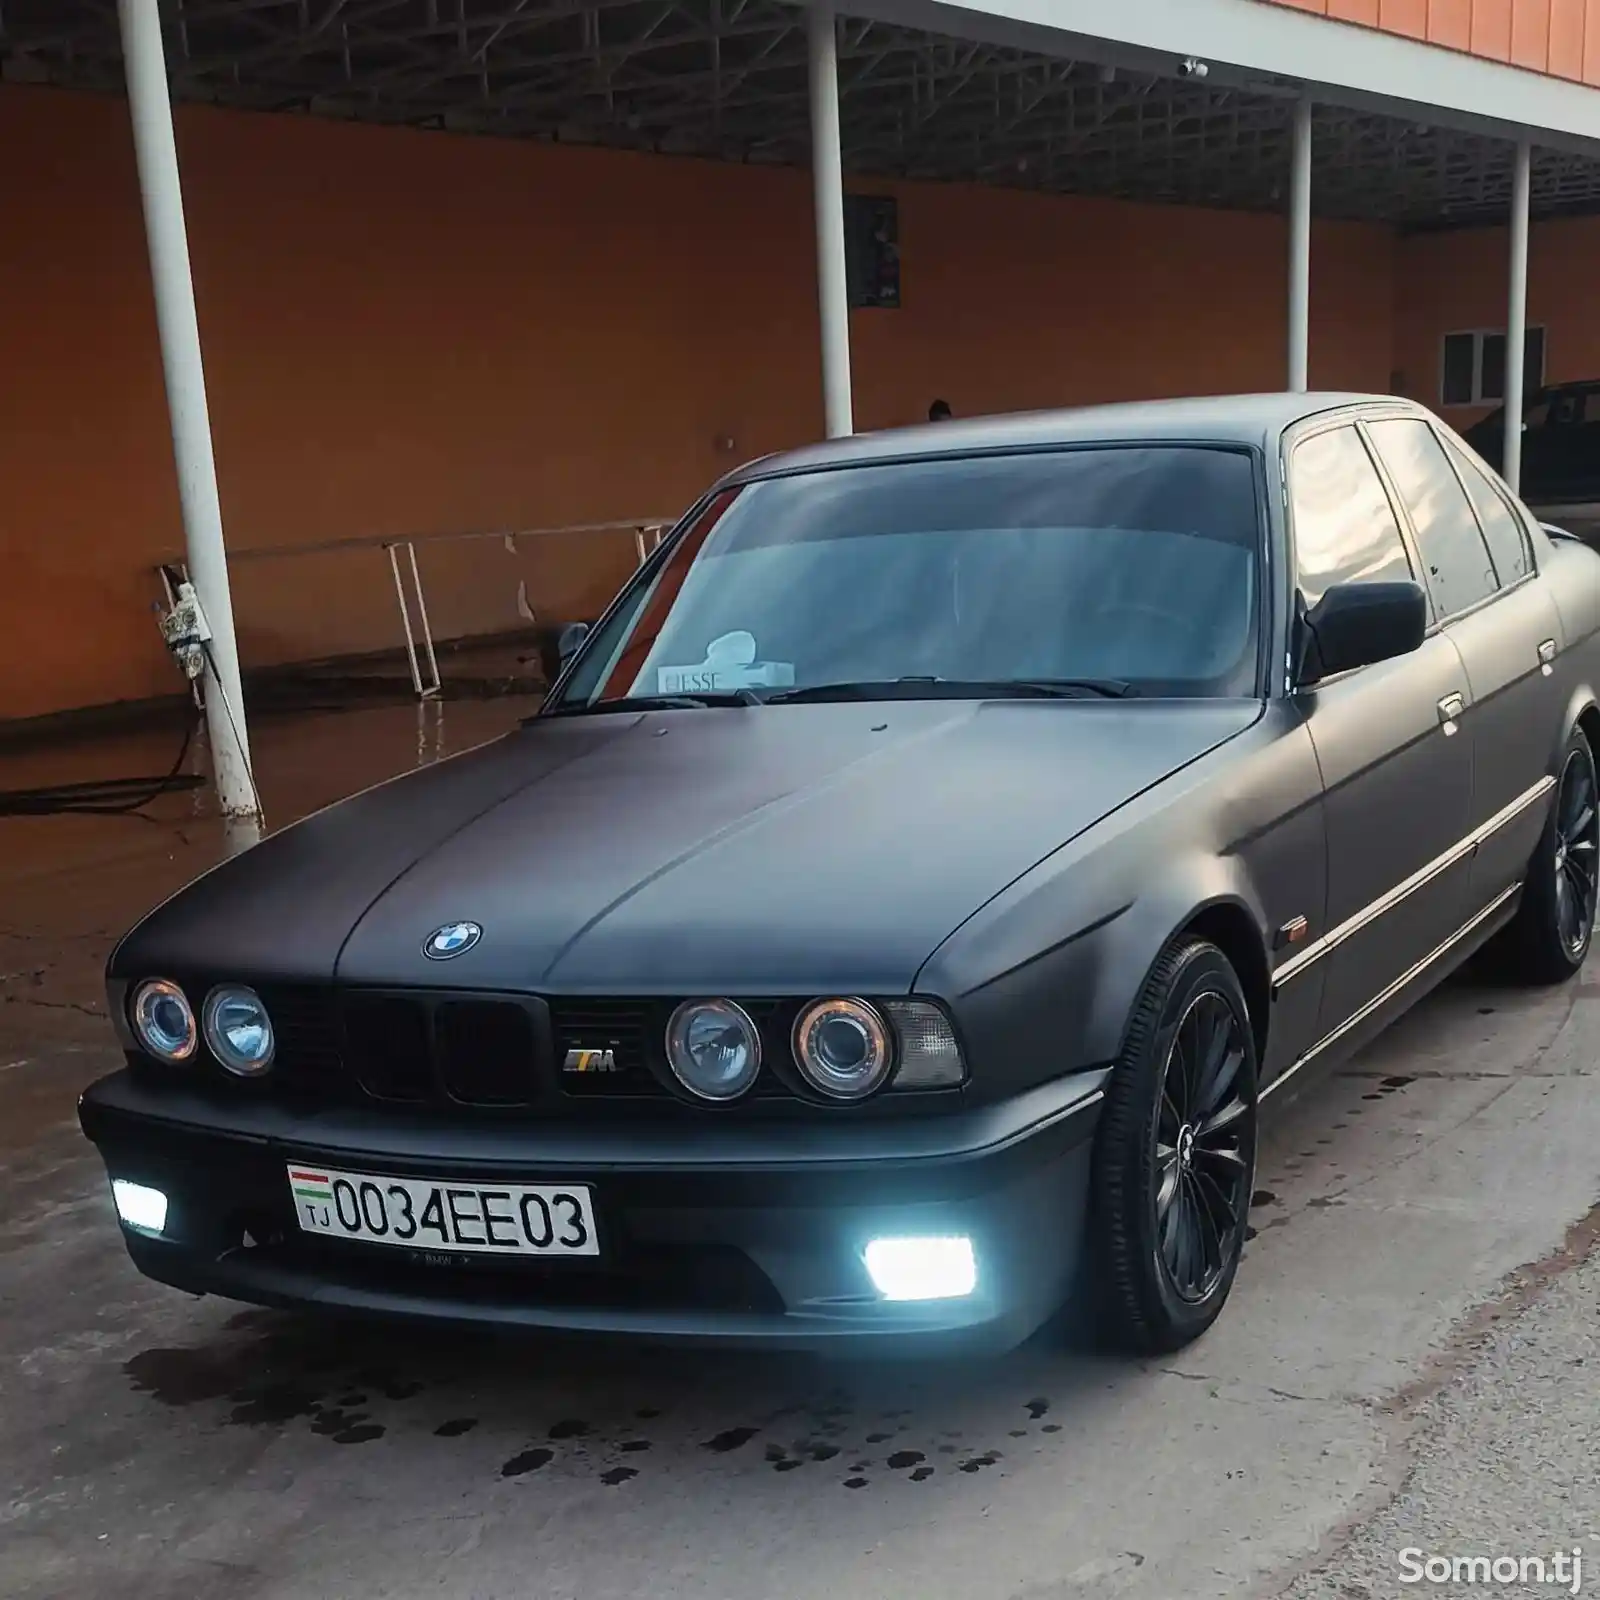 BMW 5 series, 1995-1